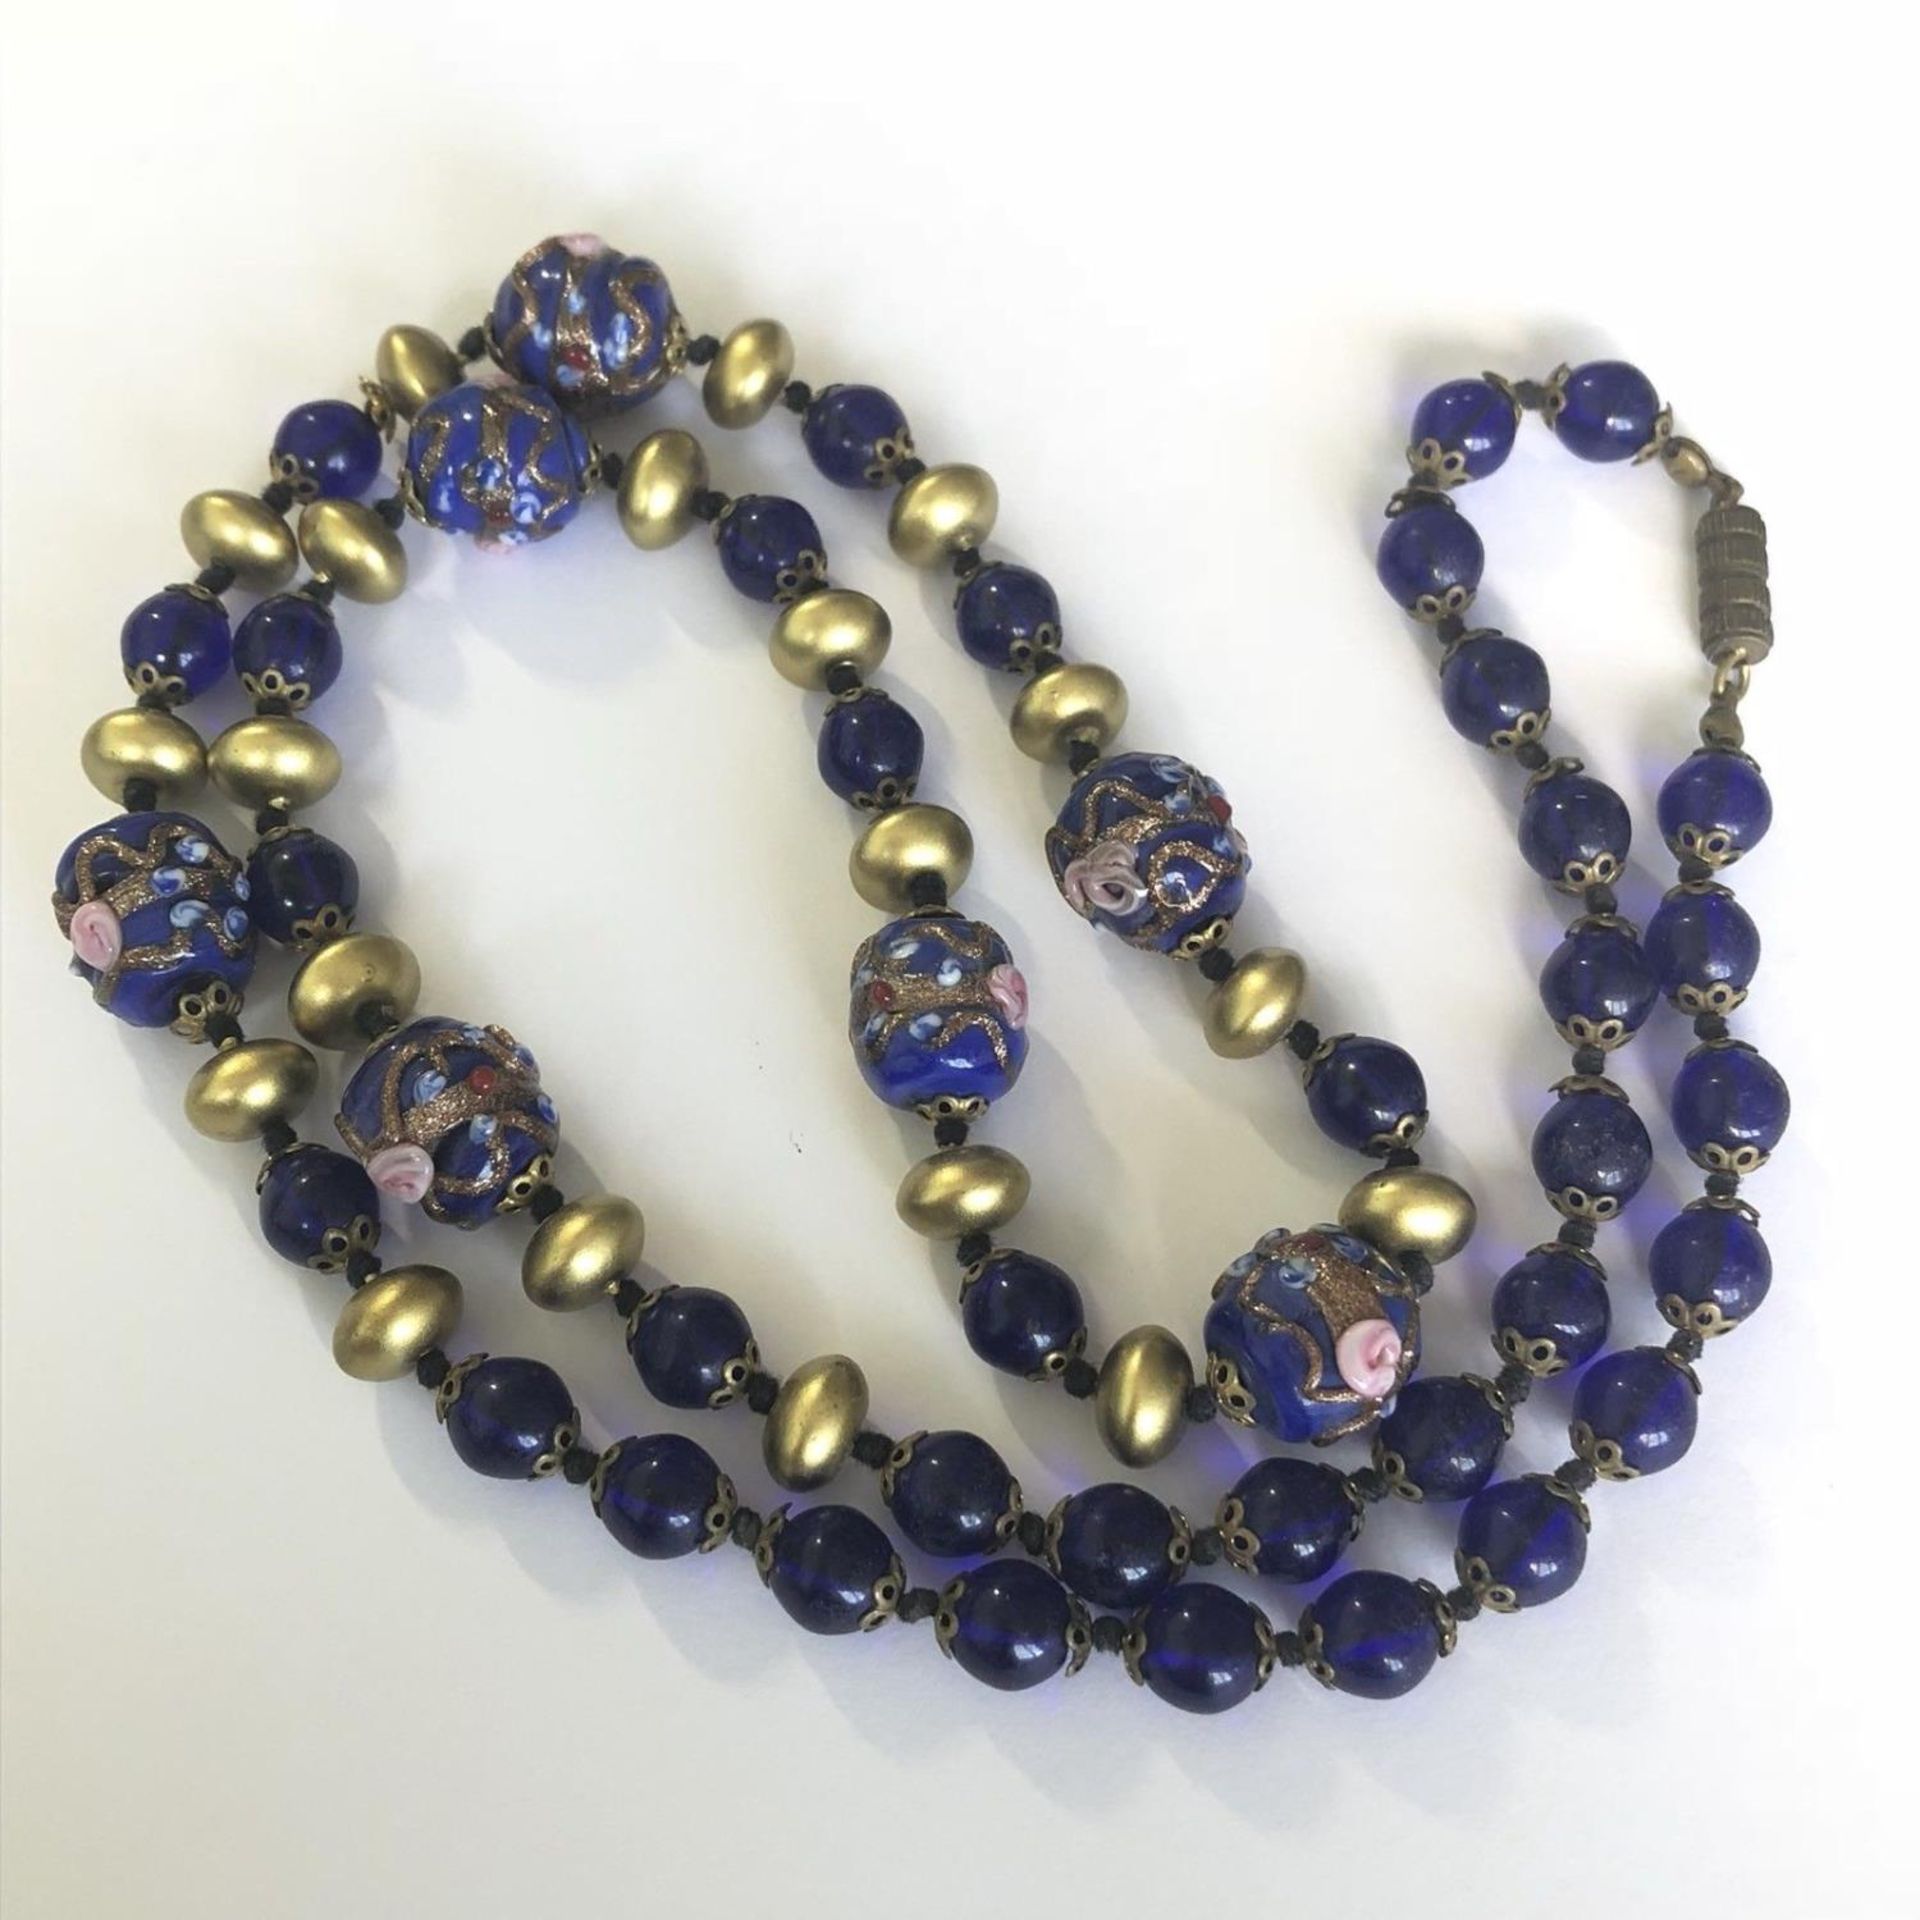 Vintage Original Venetian Blue Glass Necklace with Fiorato Wedding Cake Beads